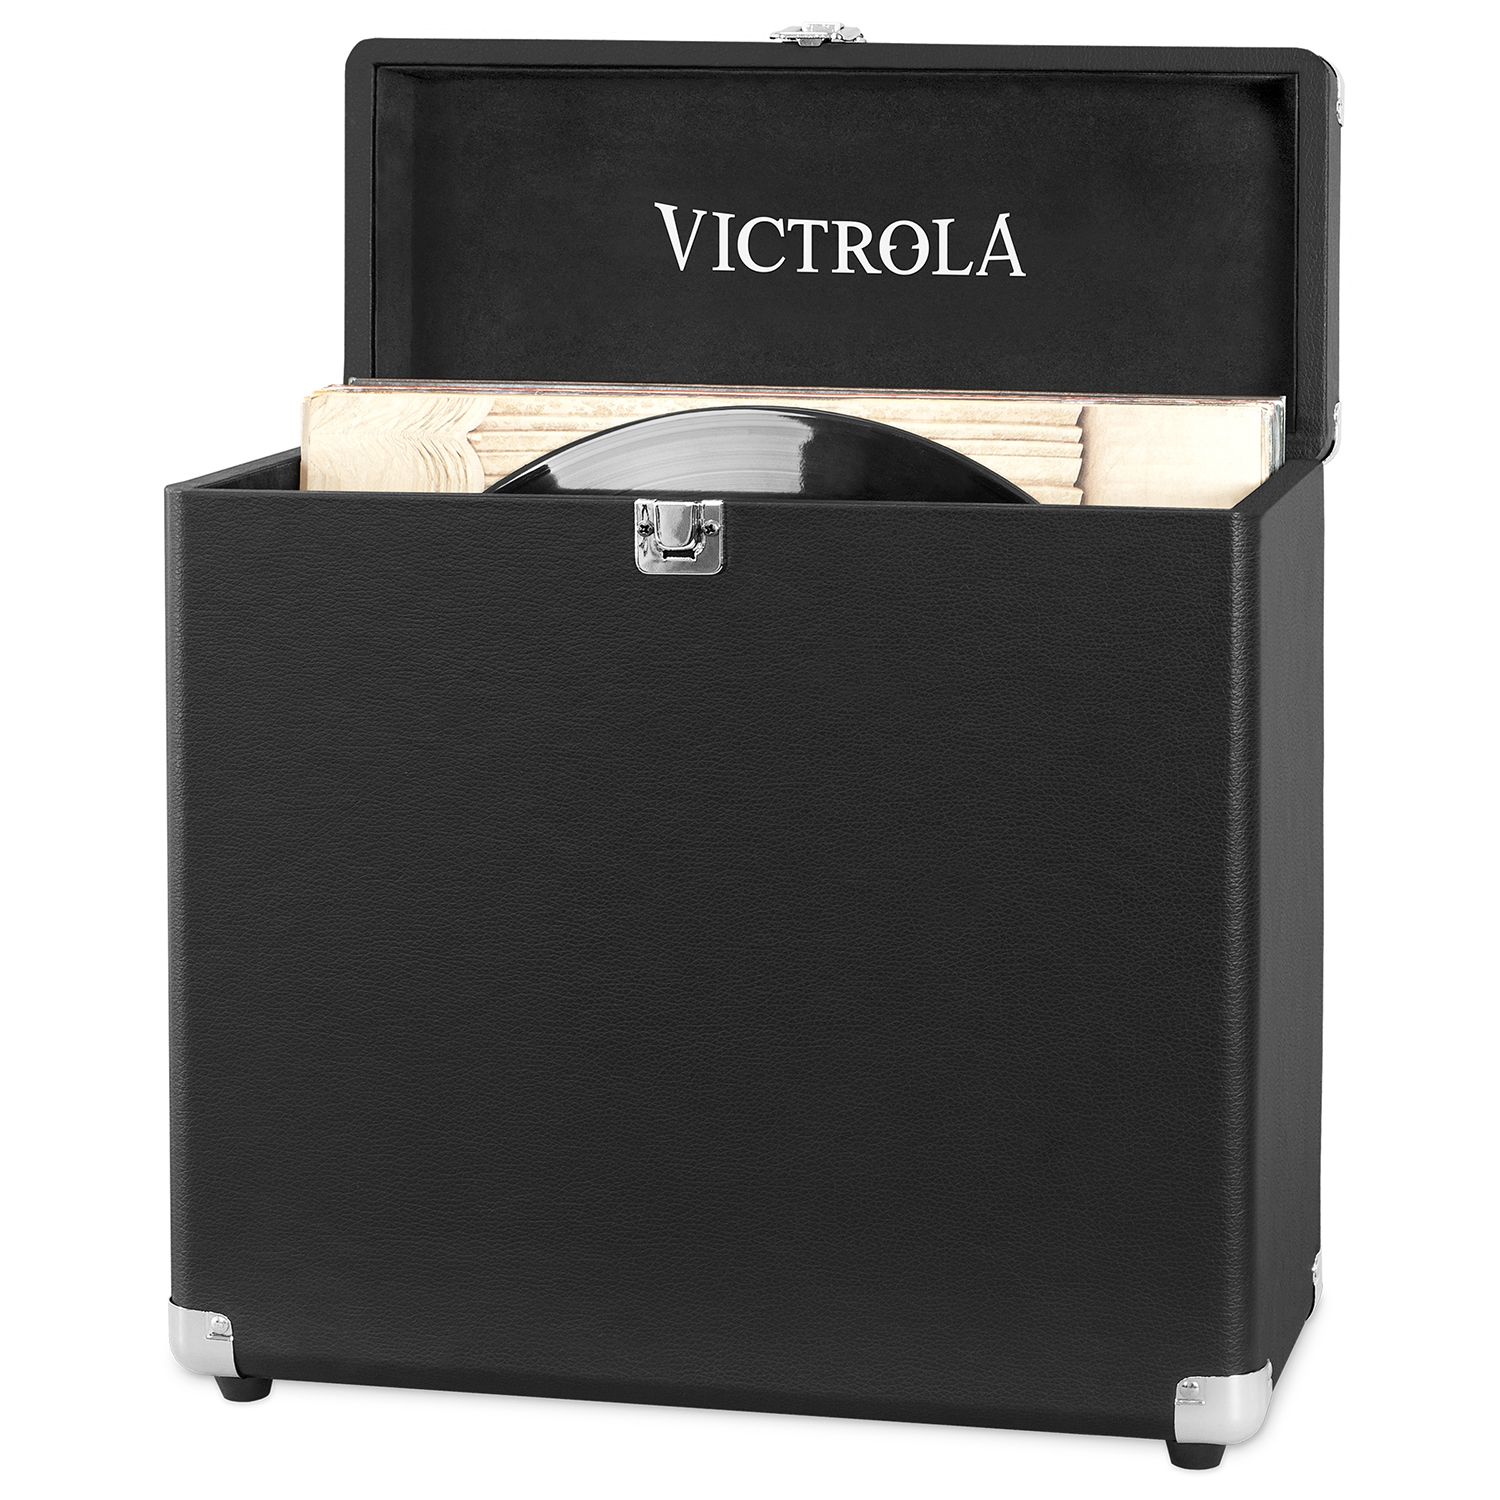 VSC-20-BK, storage case vinyl records up to 30pcs, immit. leather, black